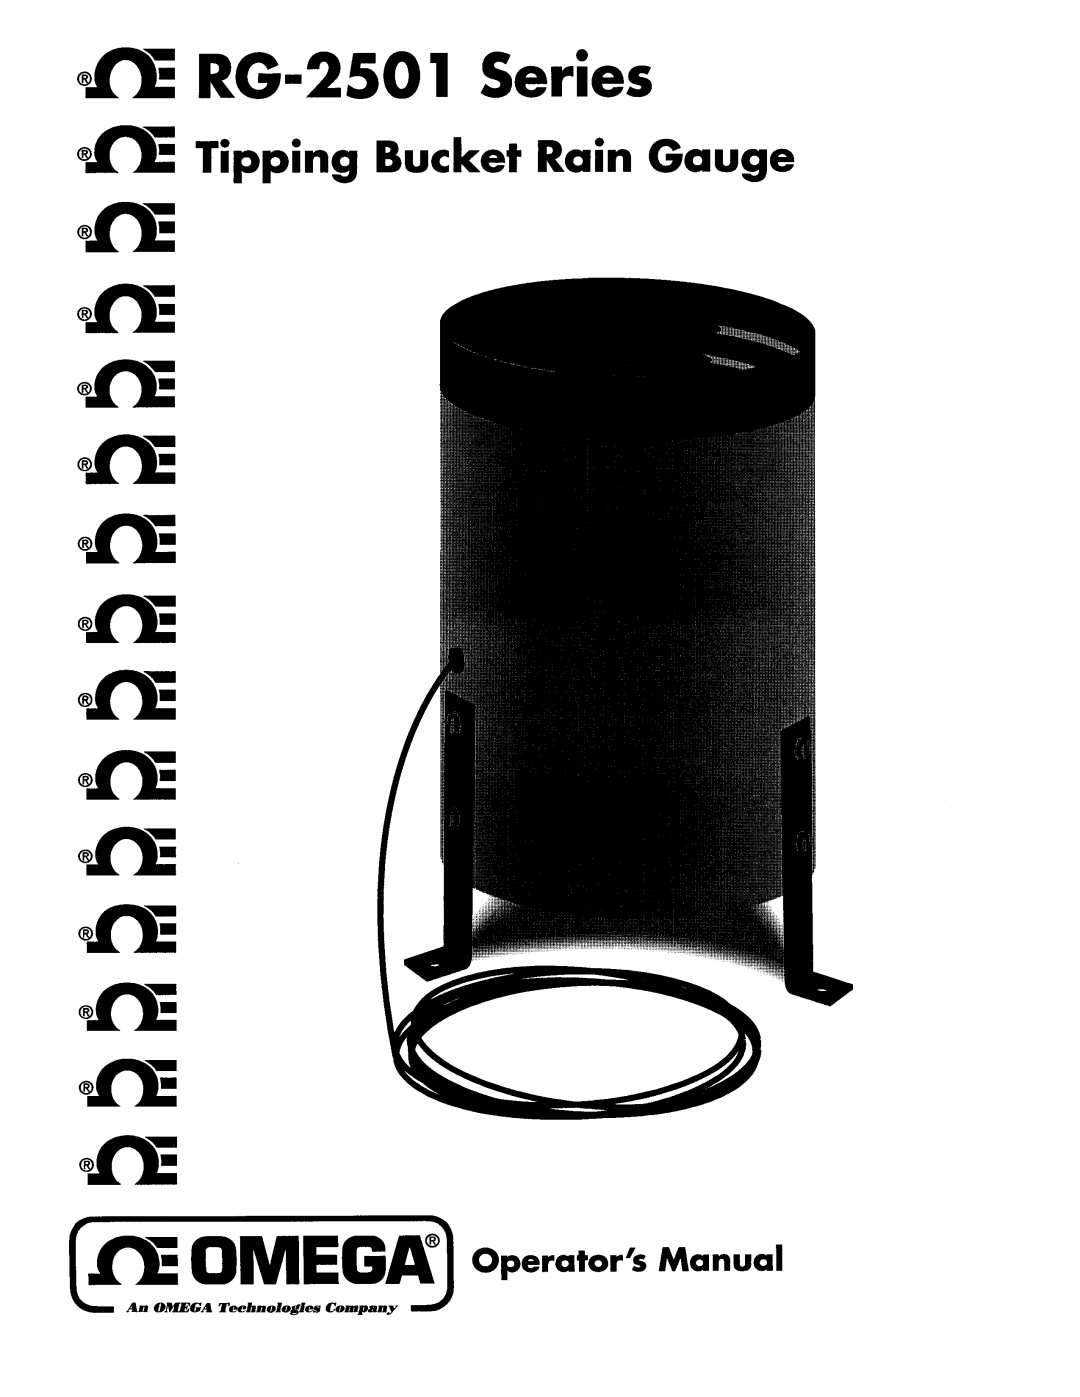 Omega manual a OMEGx Operator’s Manual, BL RG-2501 Series, @m Tipping Bucket Rain Gauge 